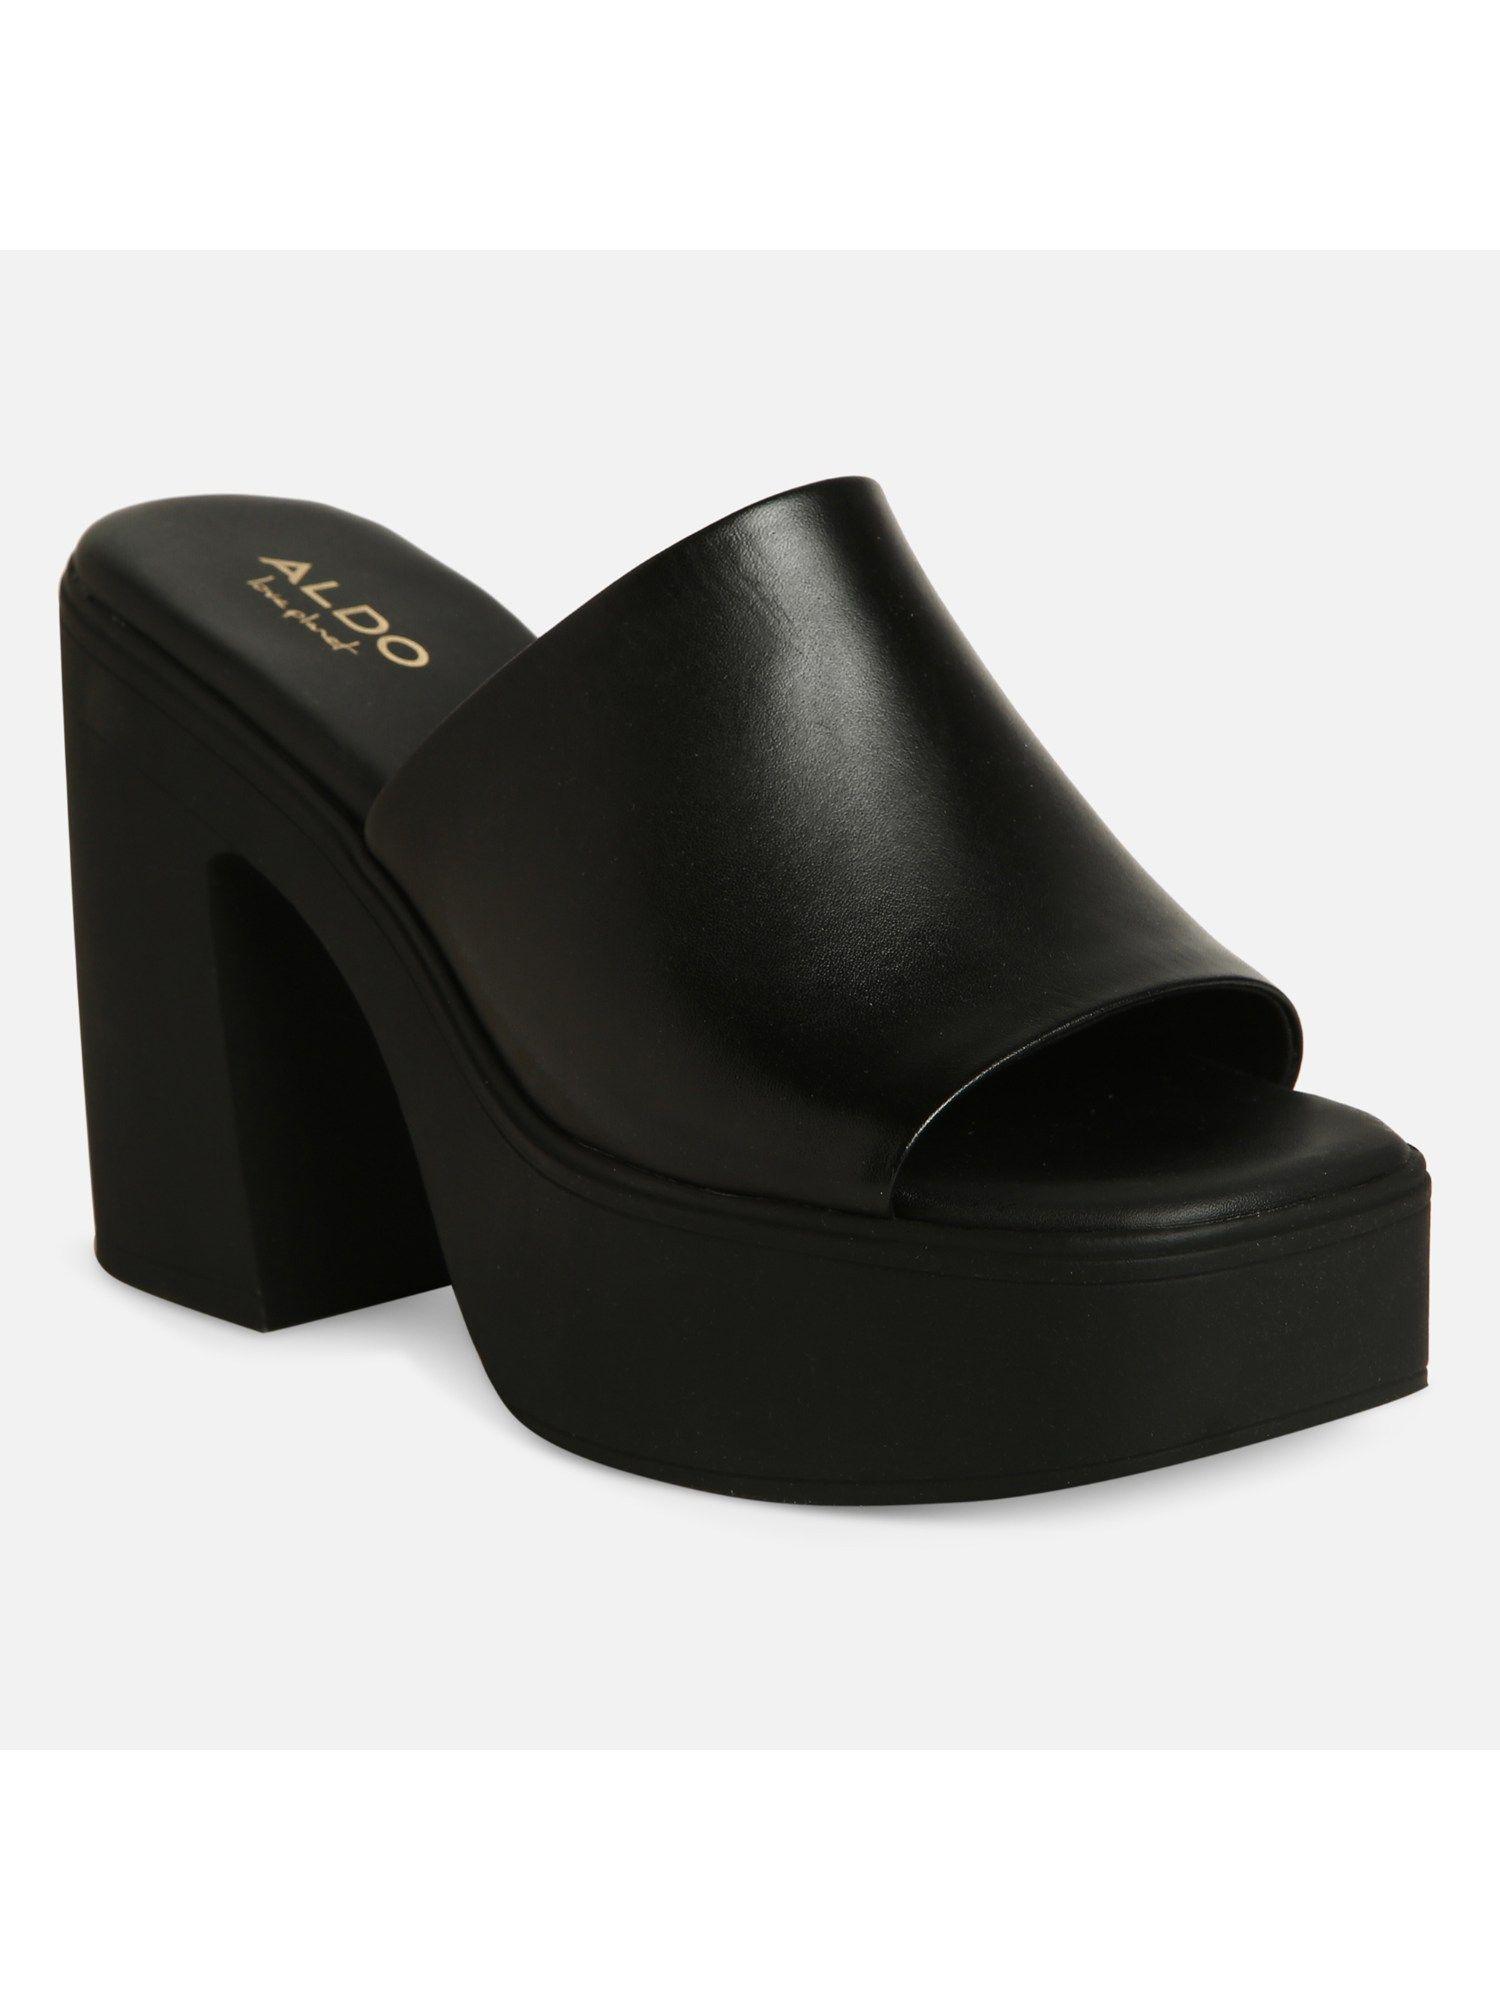 may see women black block heel sandals